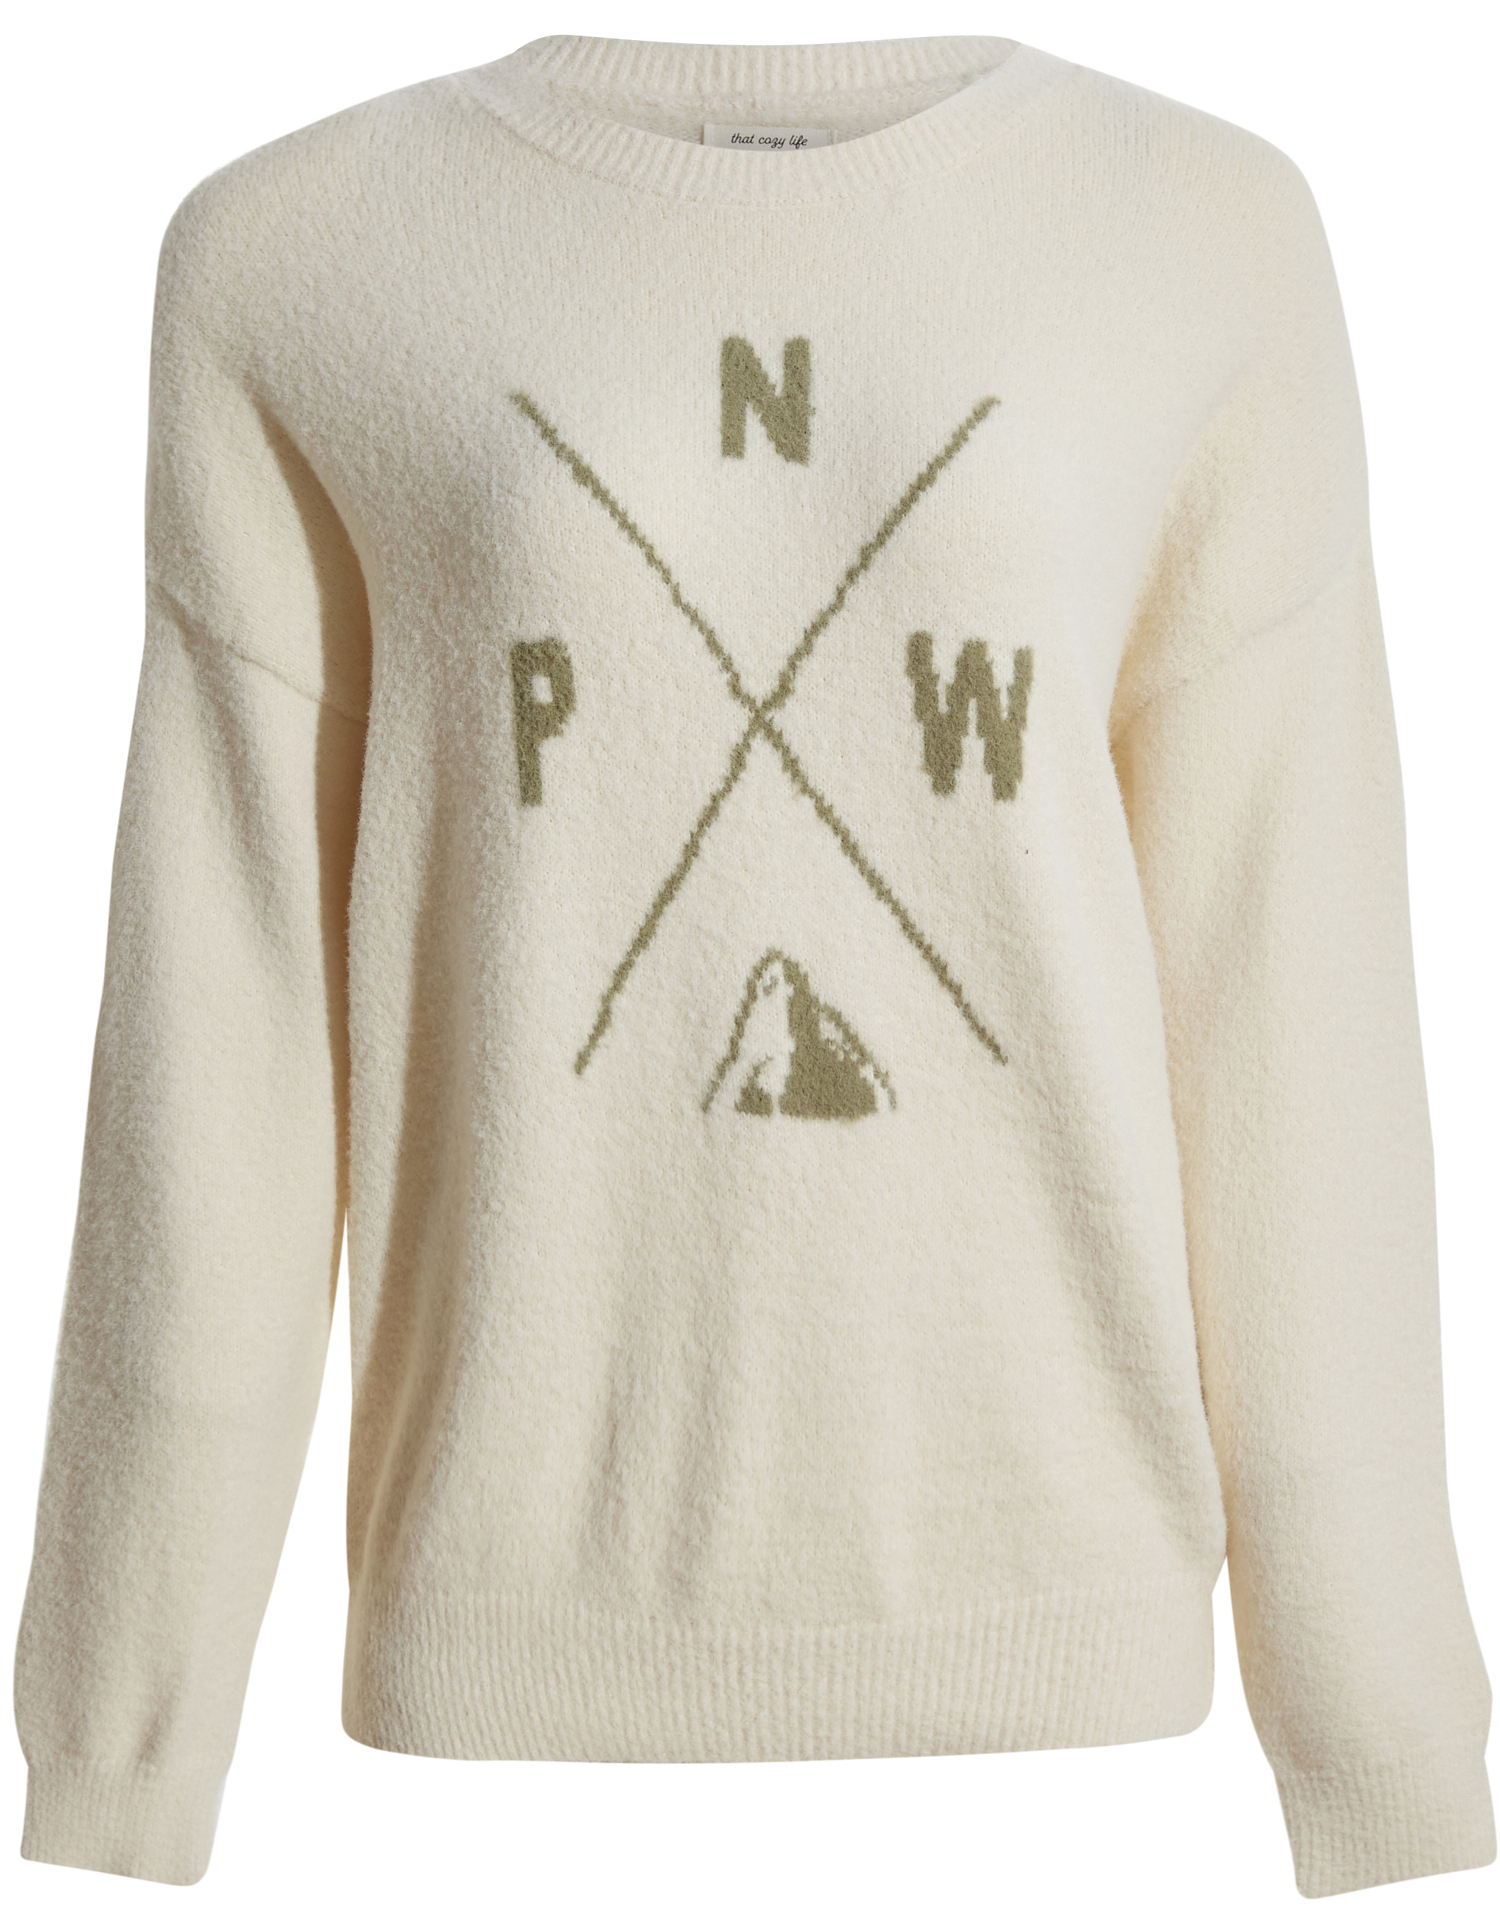 Thread & Supply PNW Sweater